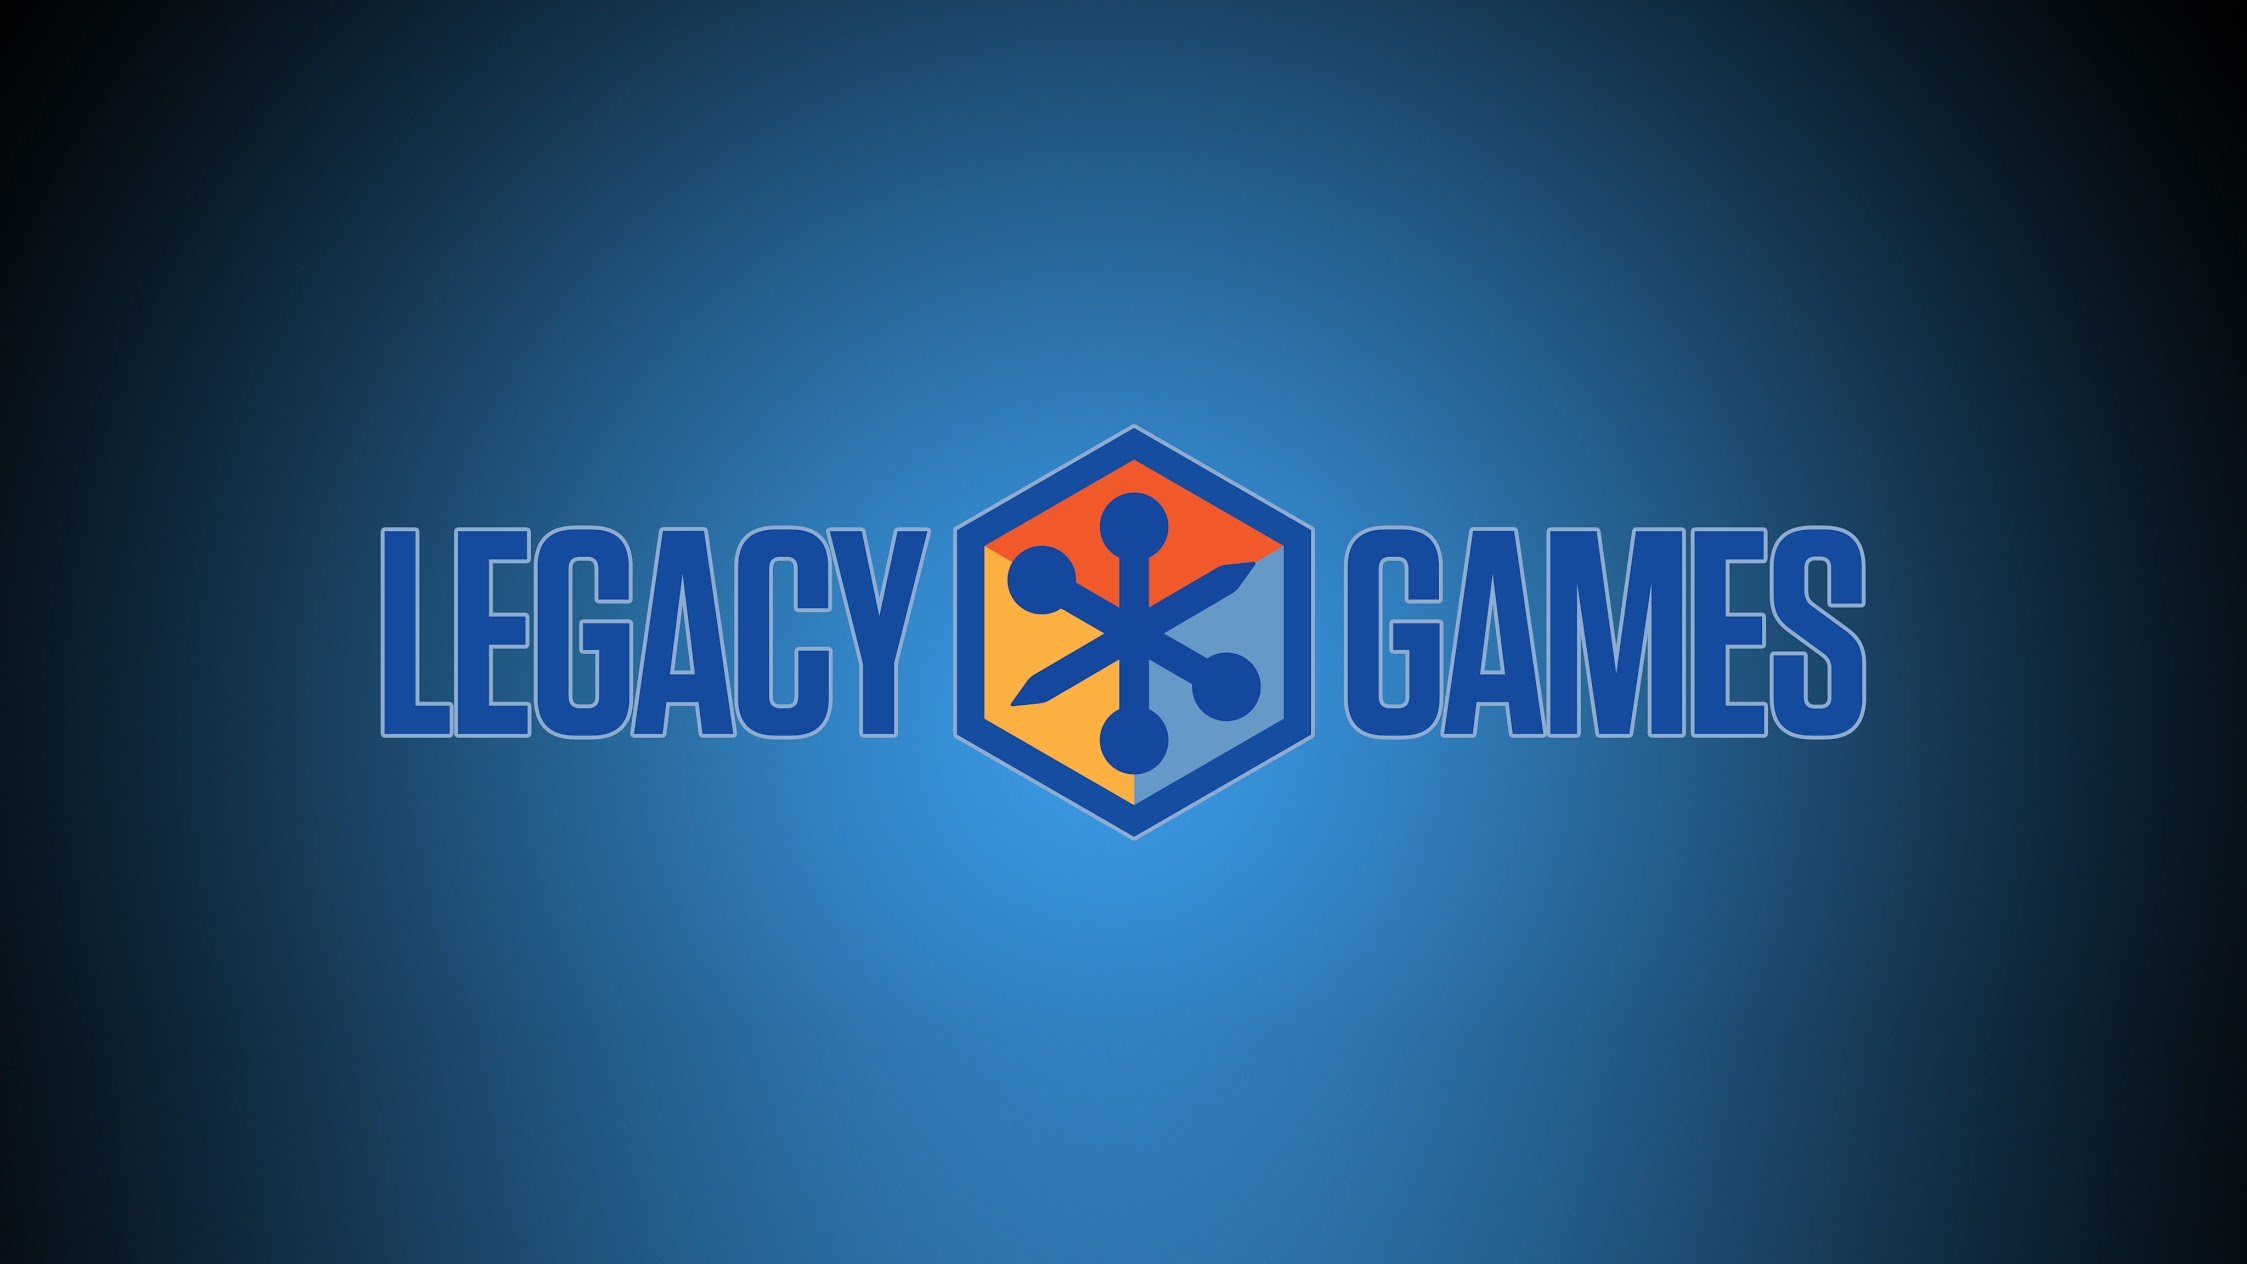 Legacy Games